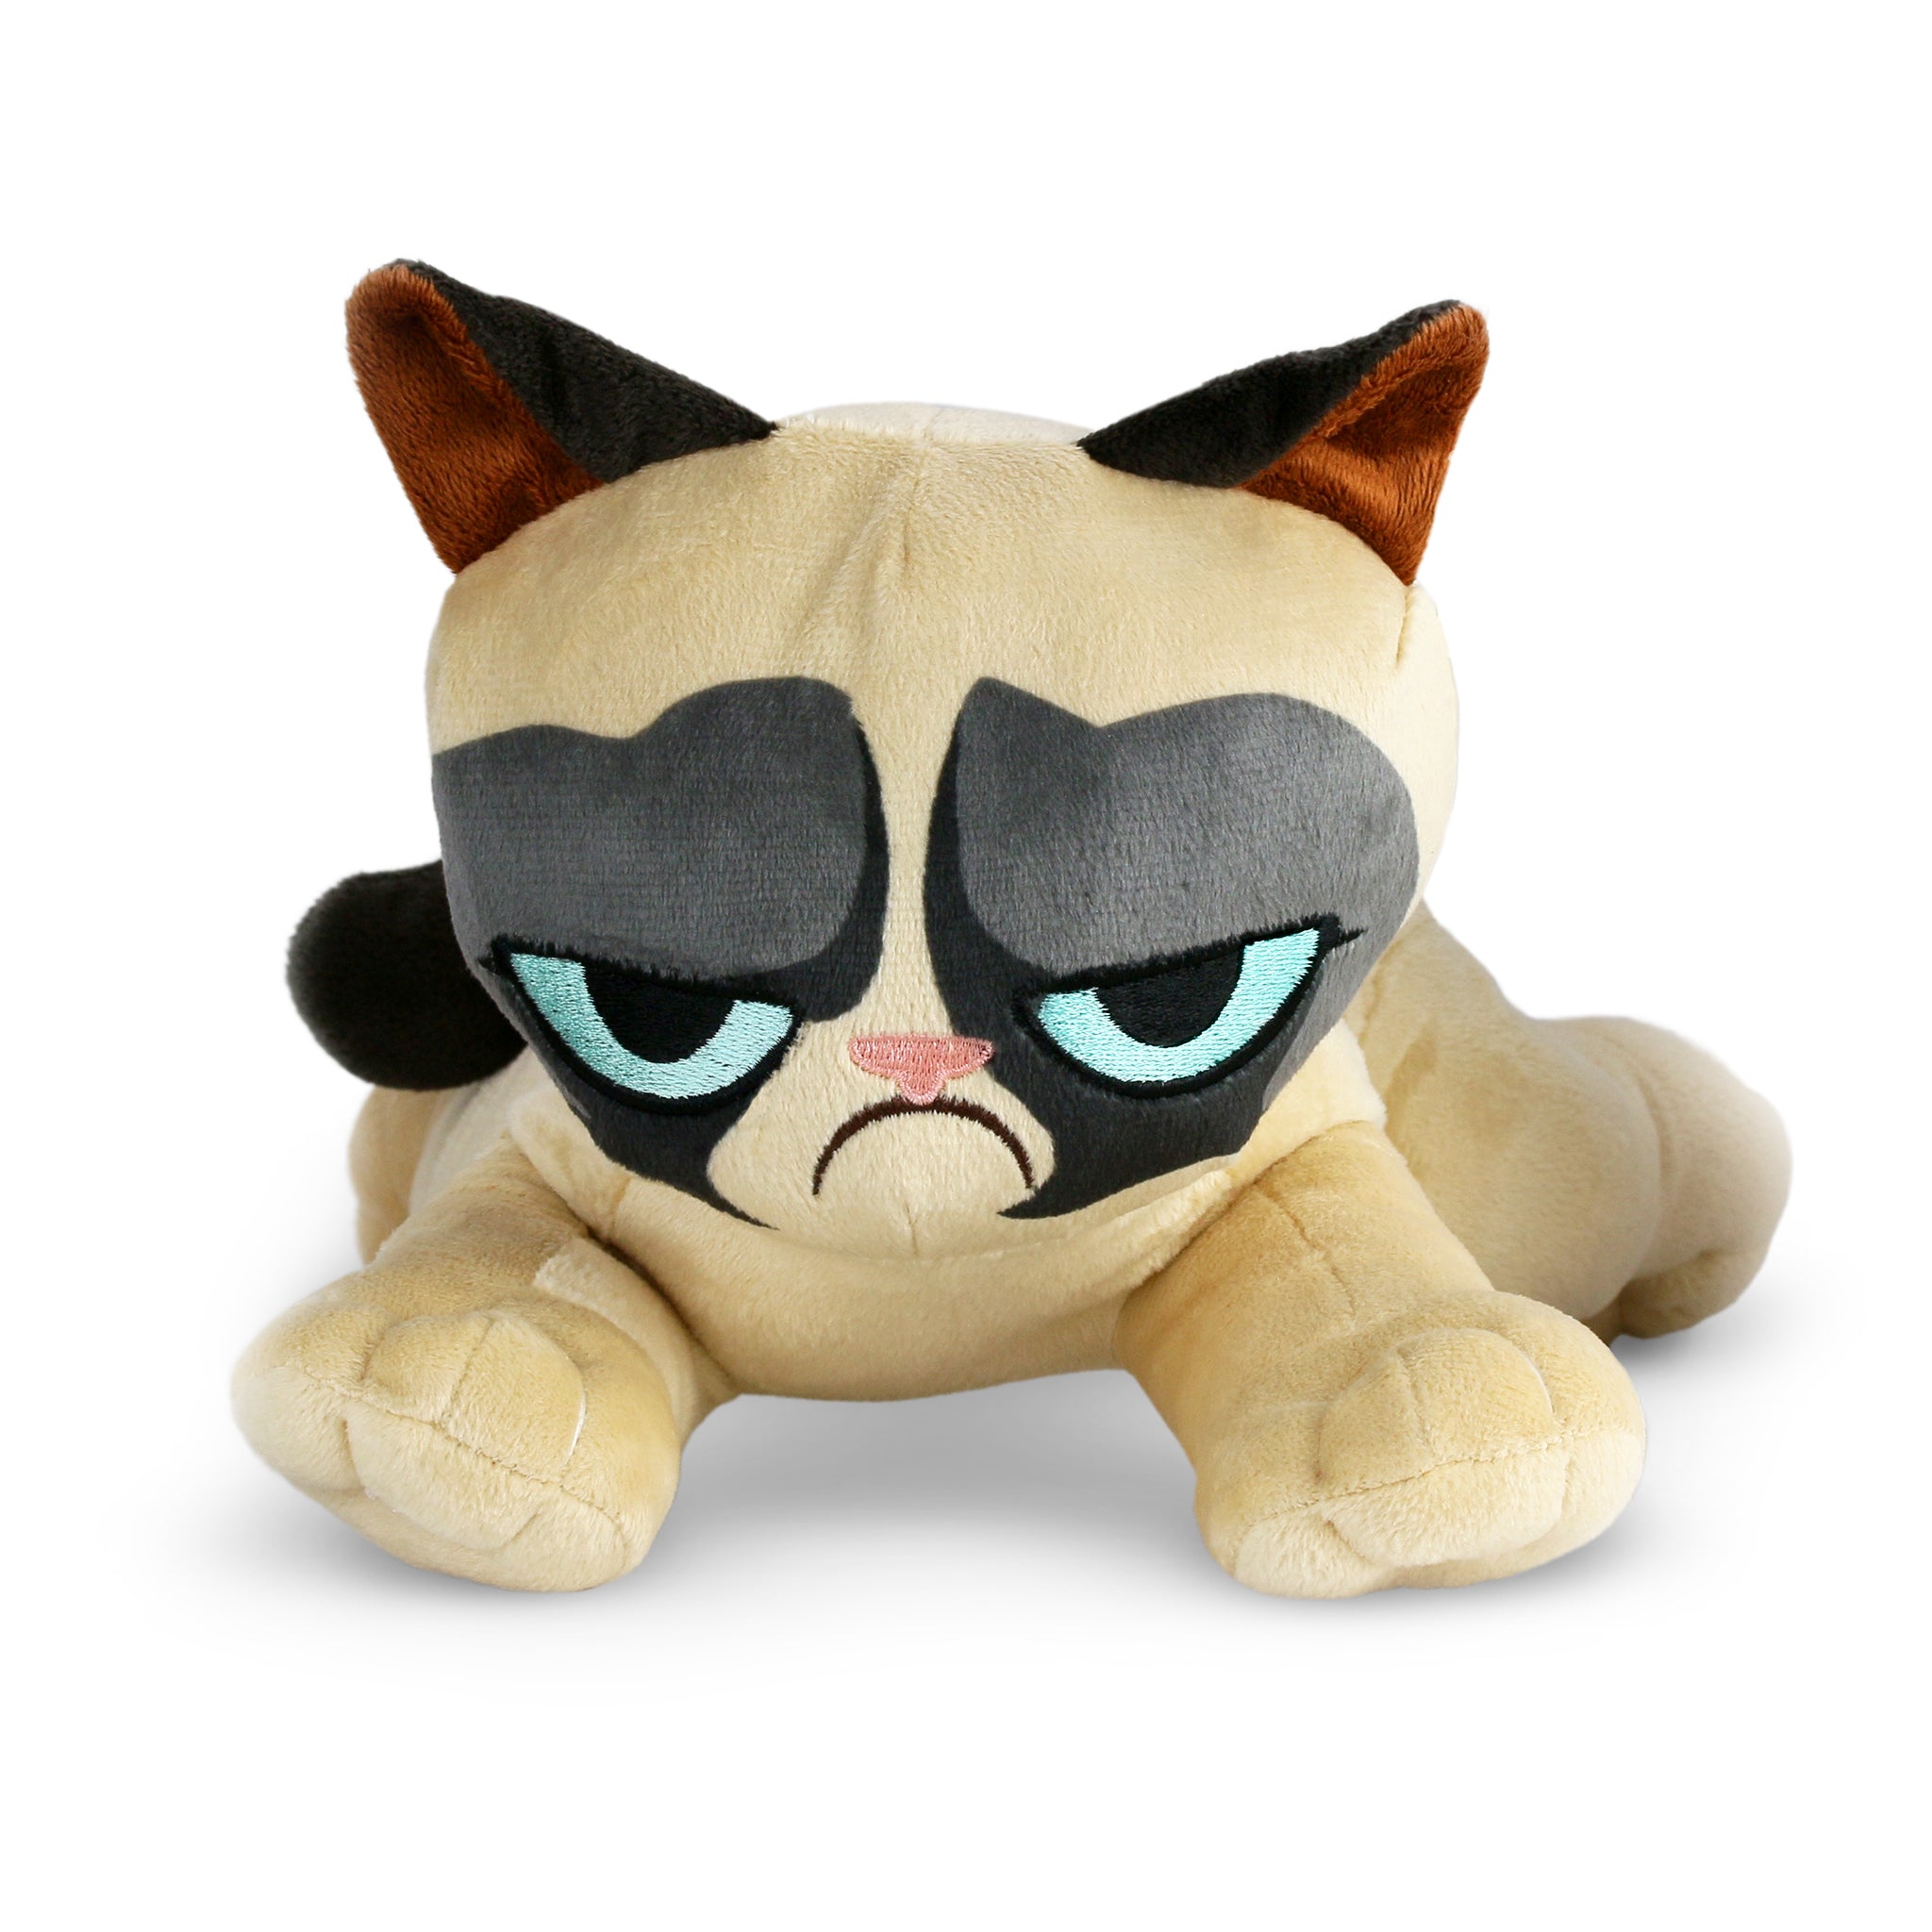 grumpy stuffed animal